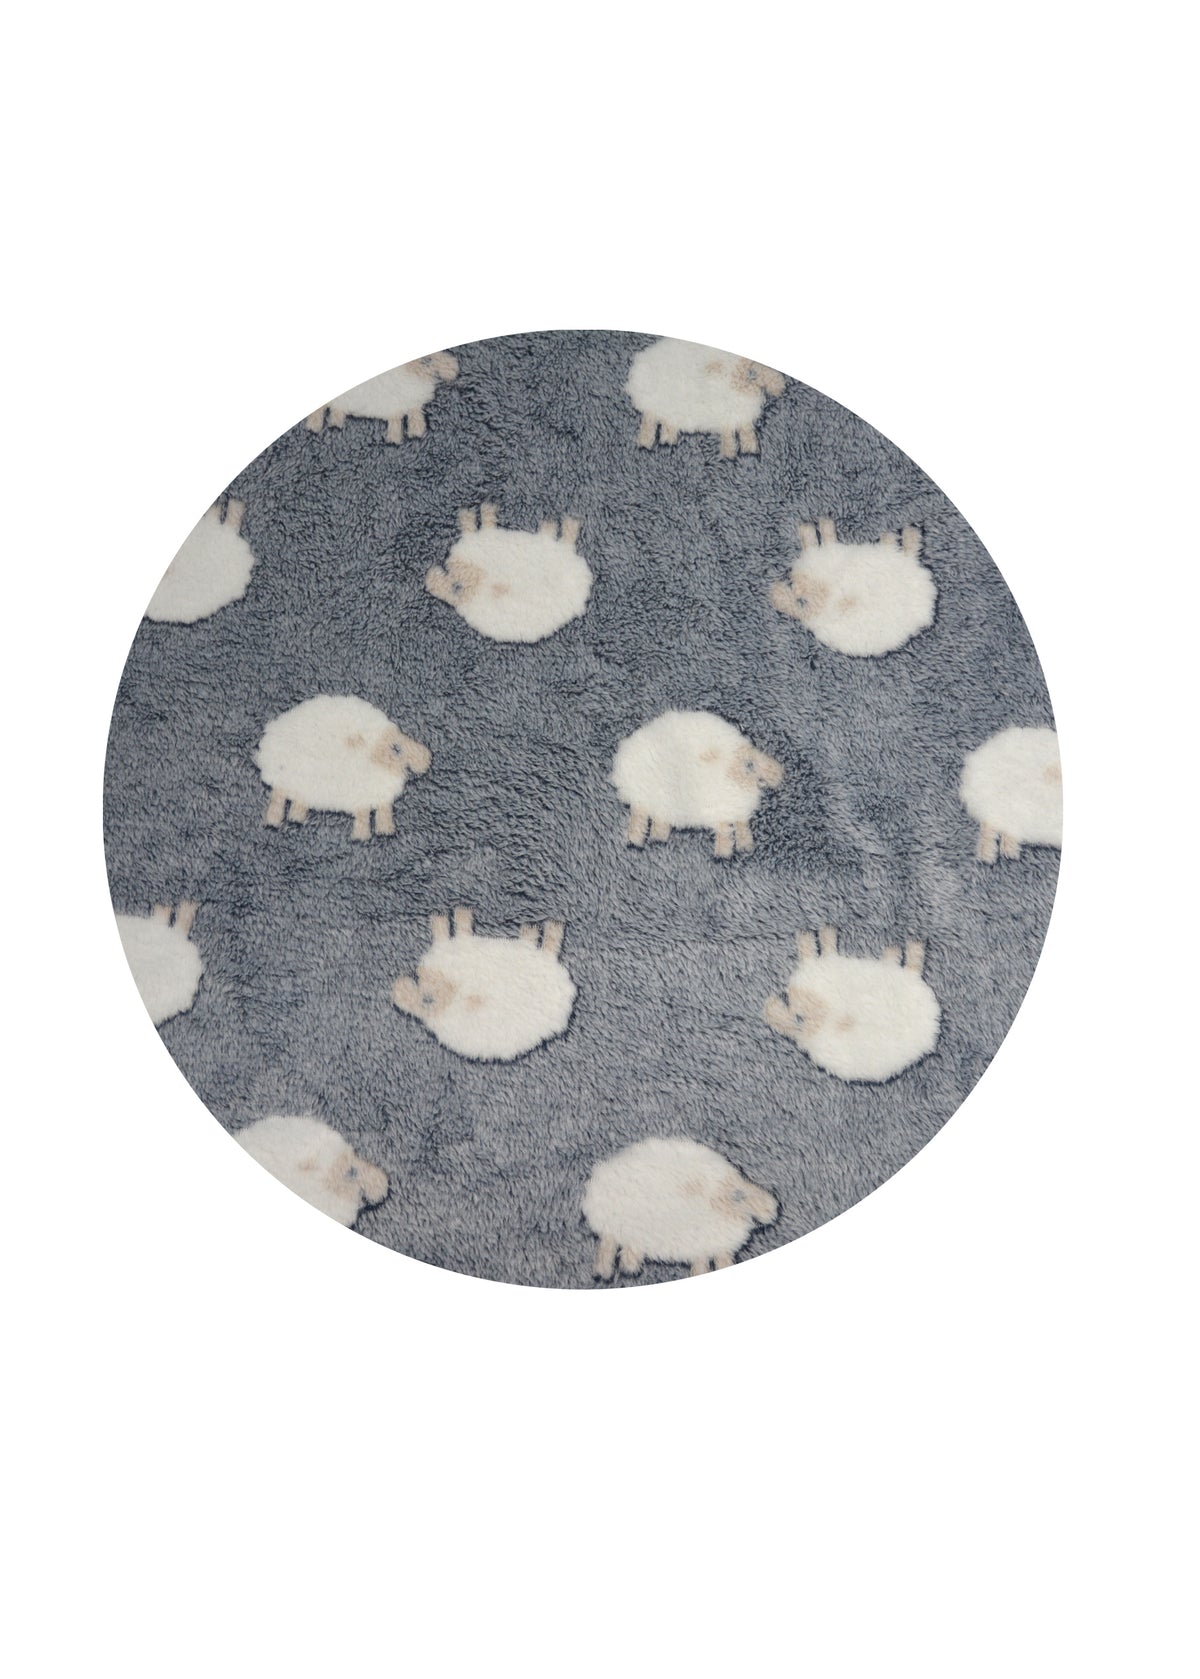 Thomas Cook Sheep Snuggle Rug - Grey/Blue